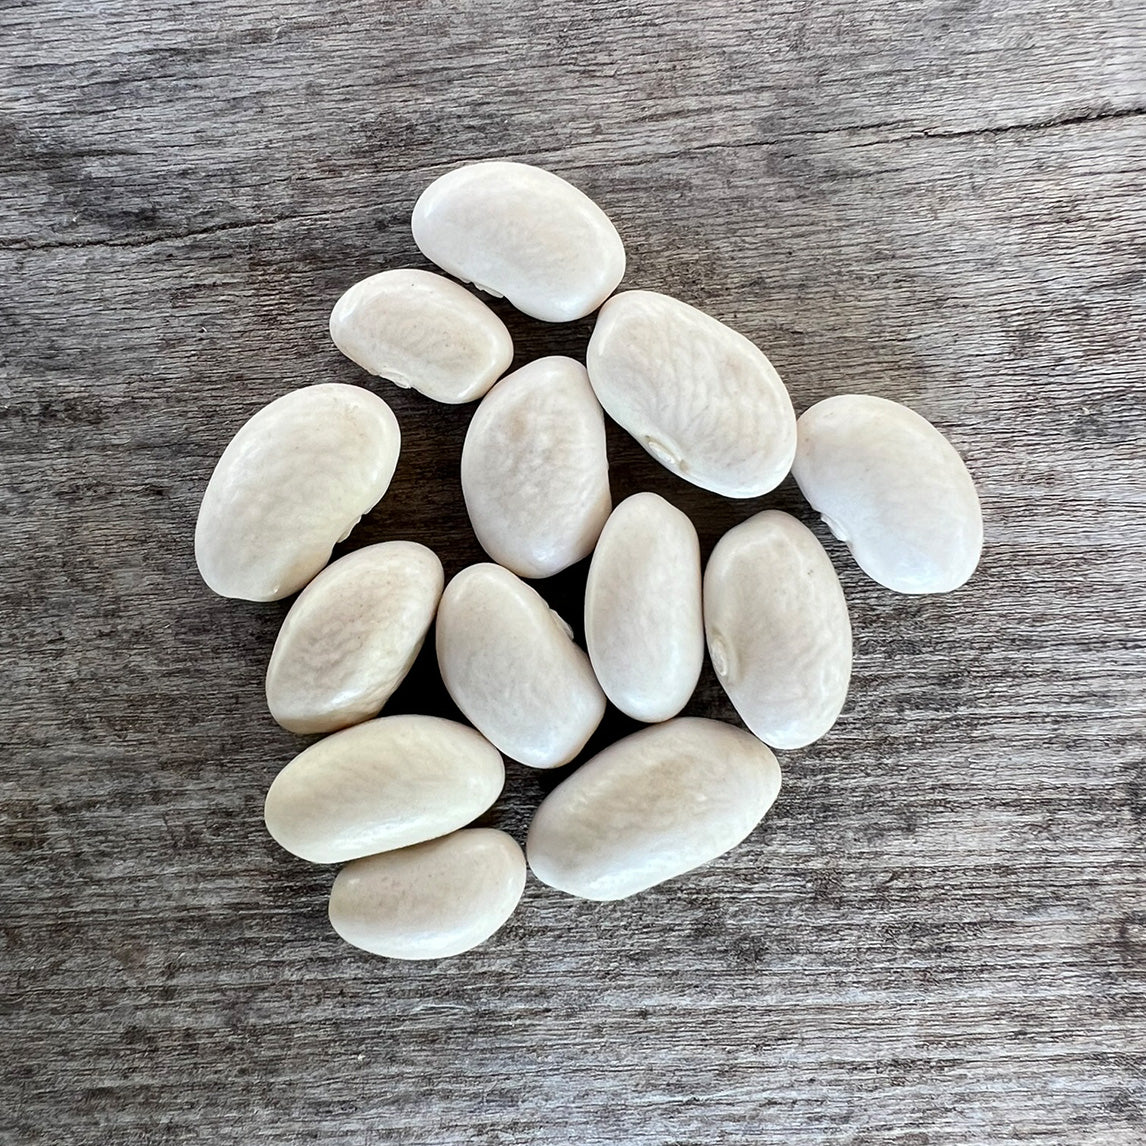 Bean 'Northeaster' (Organic)